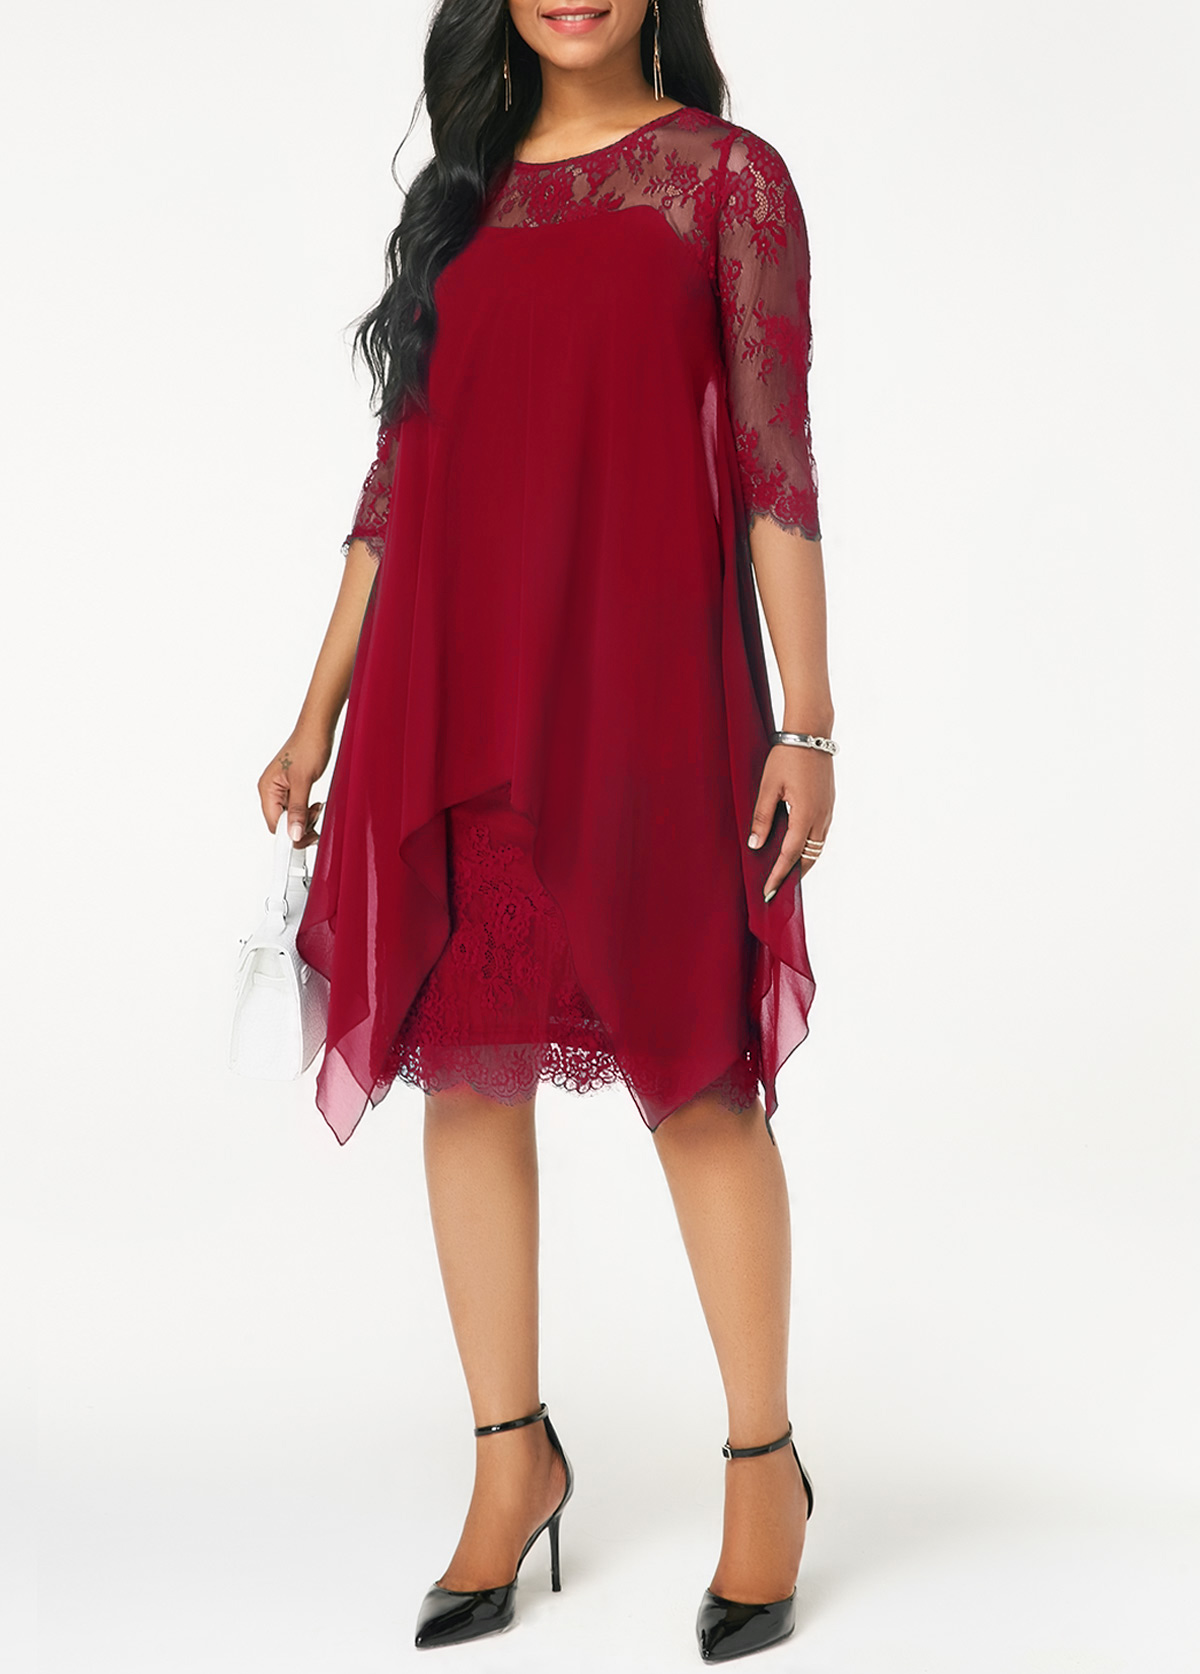 Chiffon Overlay Wine Red Three Quarter Sleeve Lace Dress